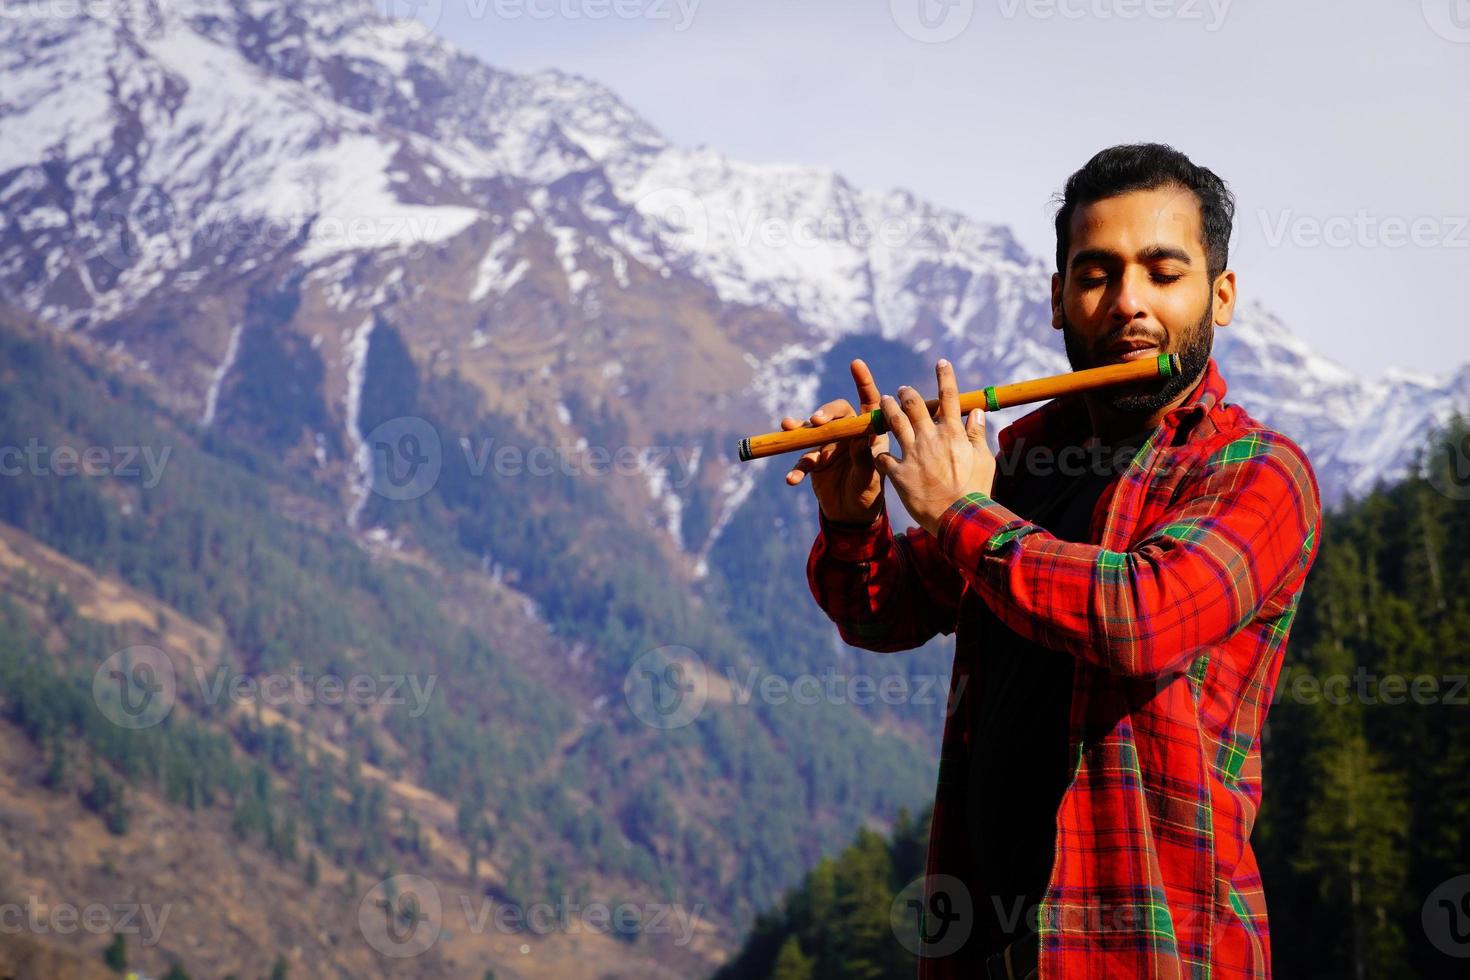 bansuri indian instrument Young boy playing bansuri Indian flute in mountains photo